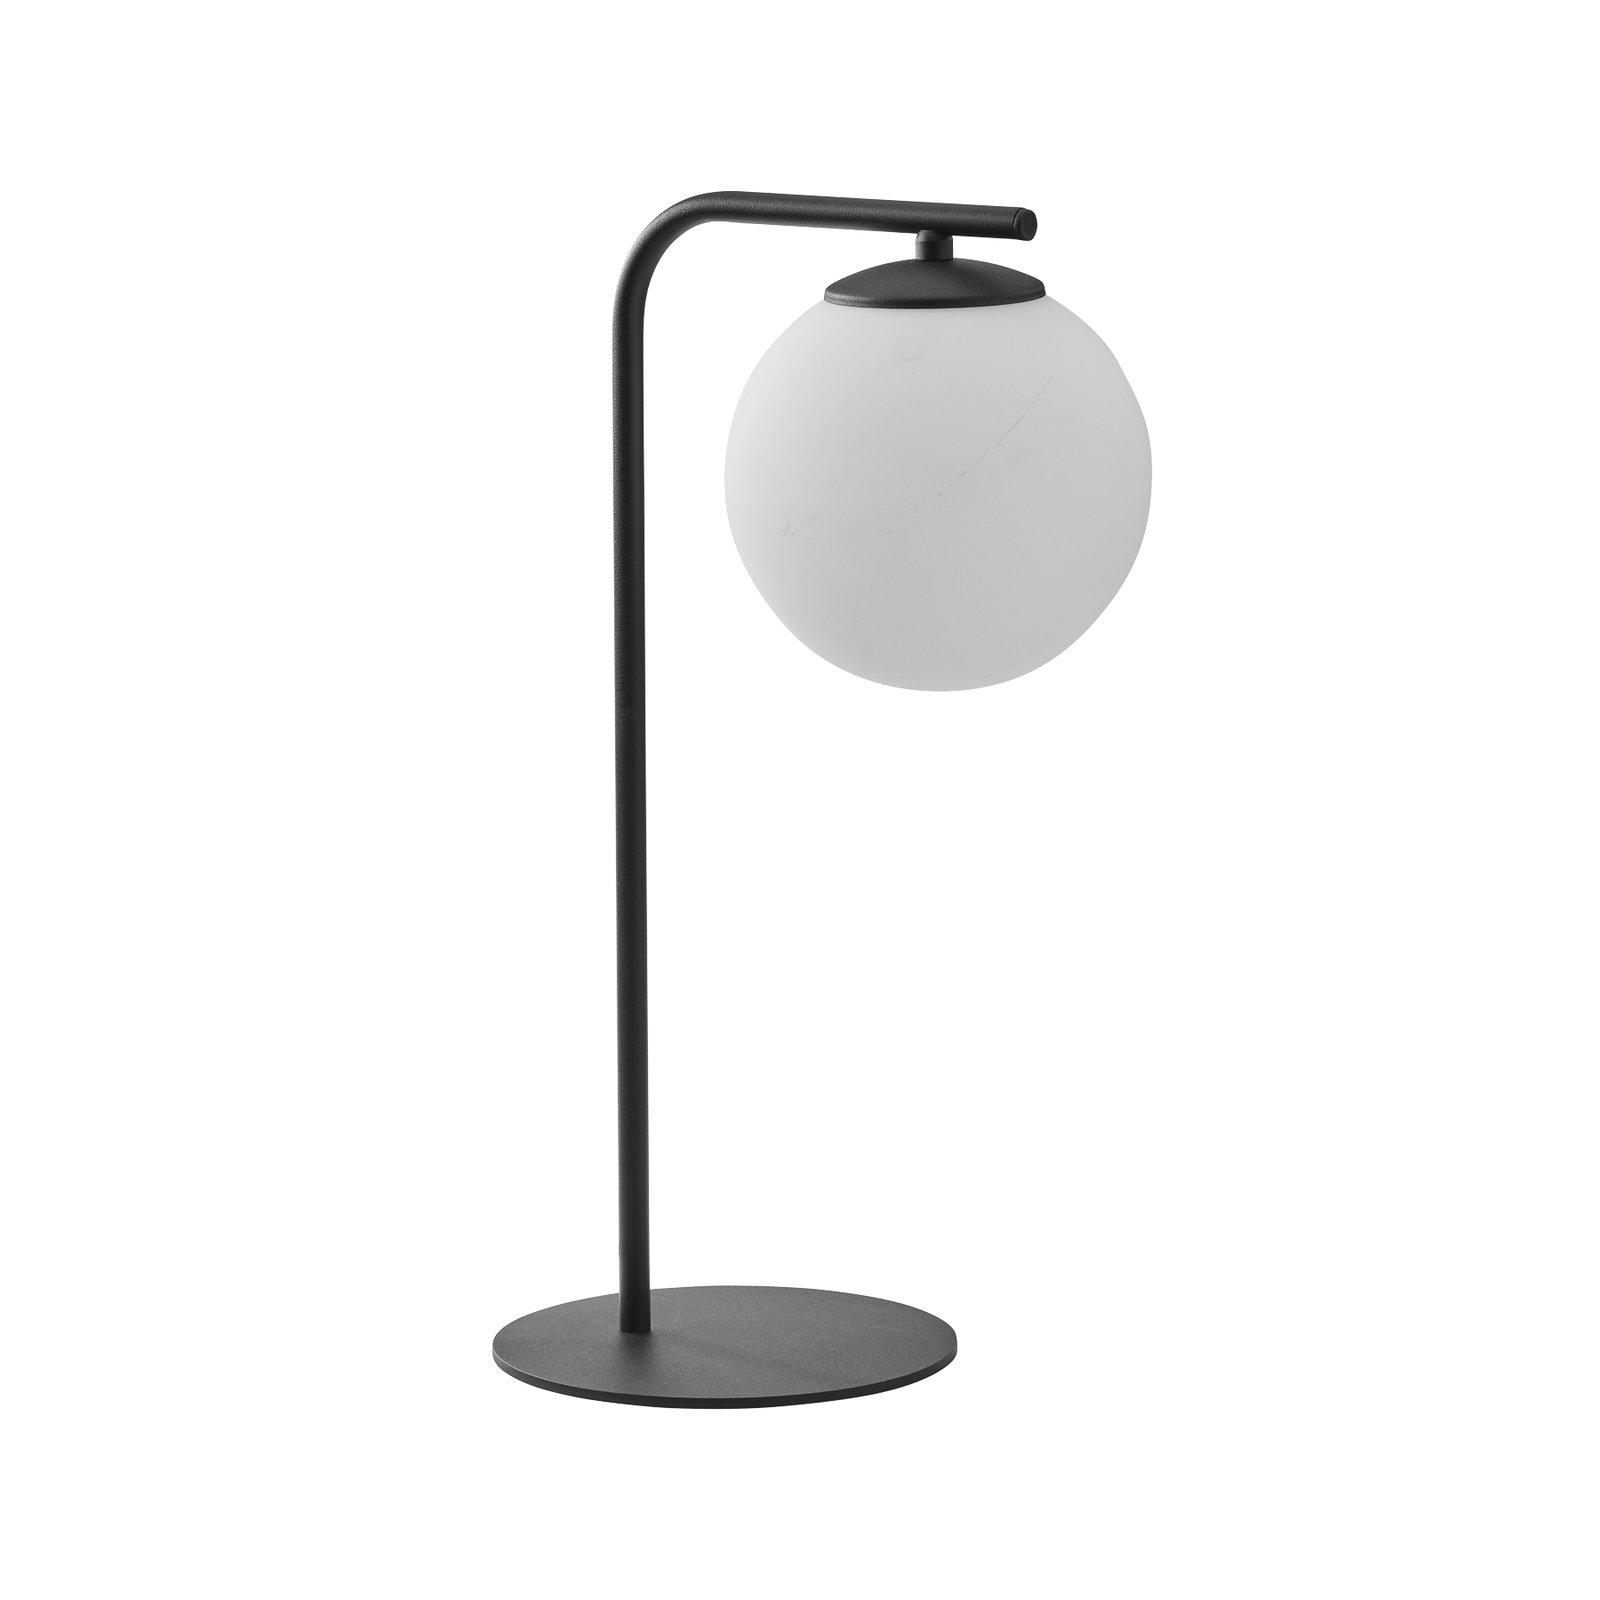 Celeste table lamp, spherical glass lampshade